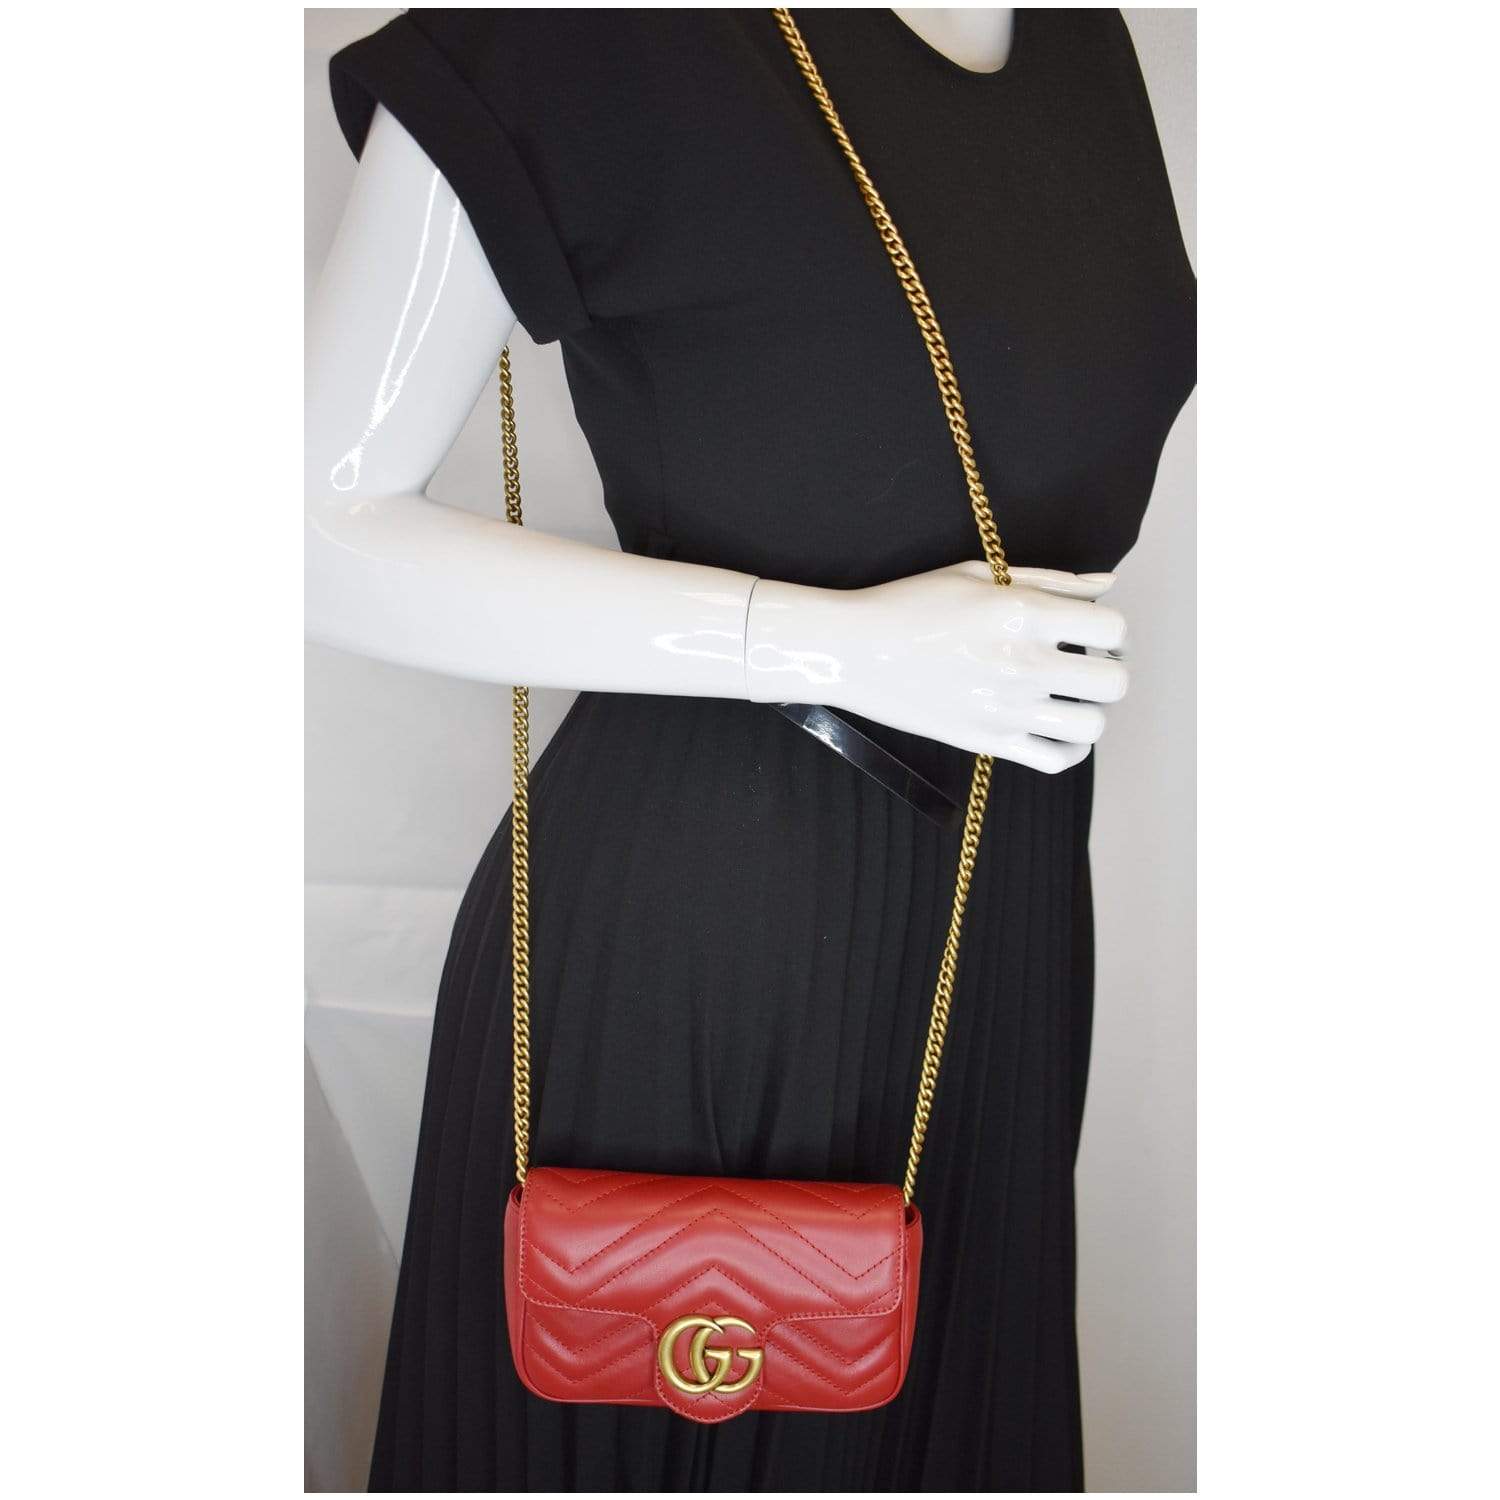 GG Marmont leather super mini bag